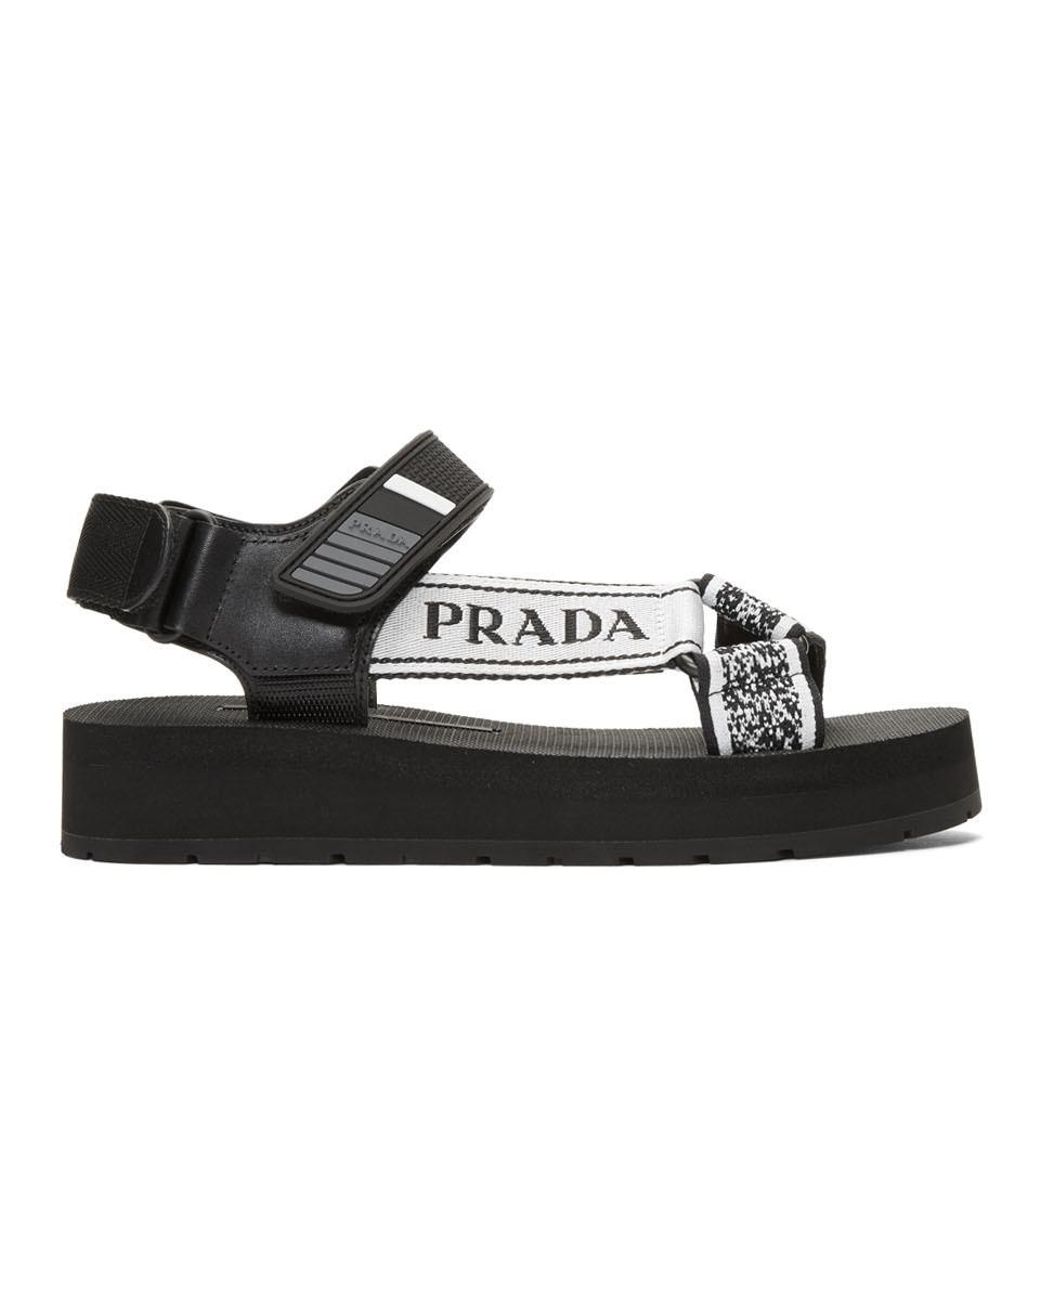 Prada Black And White Velcro Nomad Sandals | Lyst UK